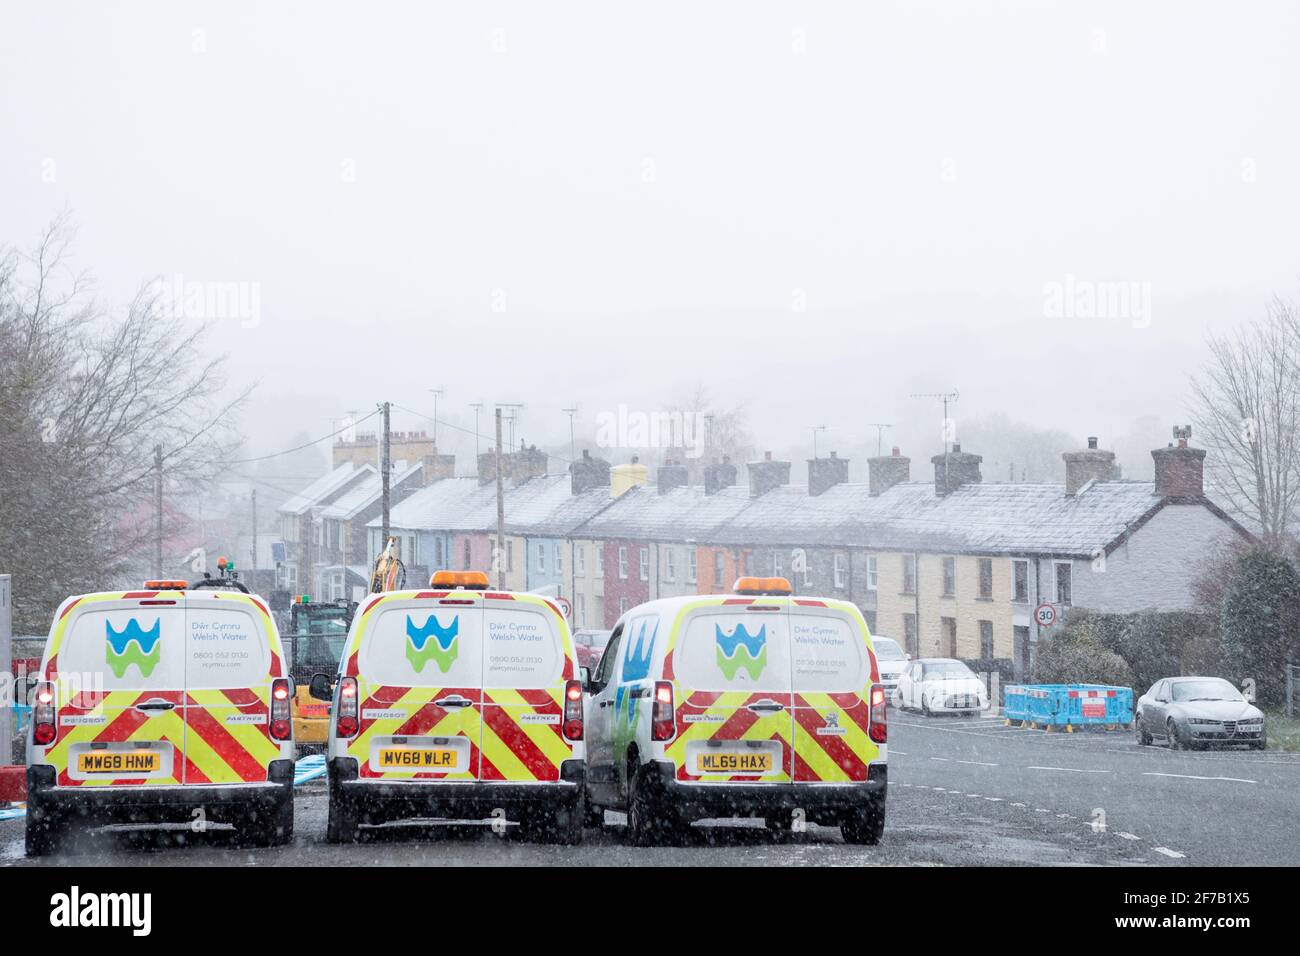 Three welsh water / Dwr cymru vans parked next to each other Stock Photo